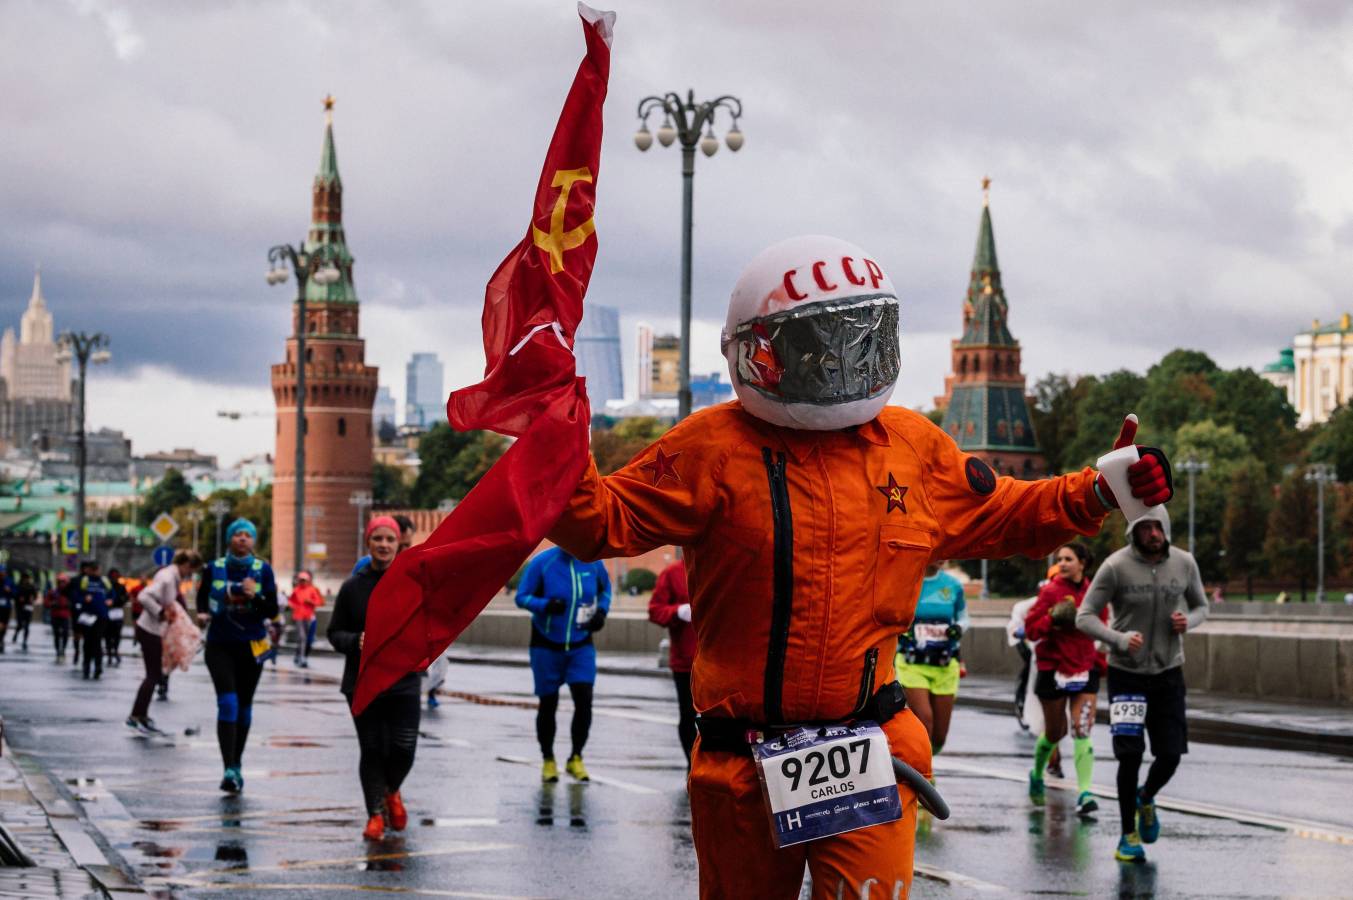 El Maratón de Moscú reunió a miles de runners que descubrieron la capital rusa de una forma diferente.